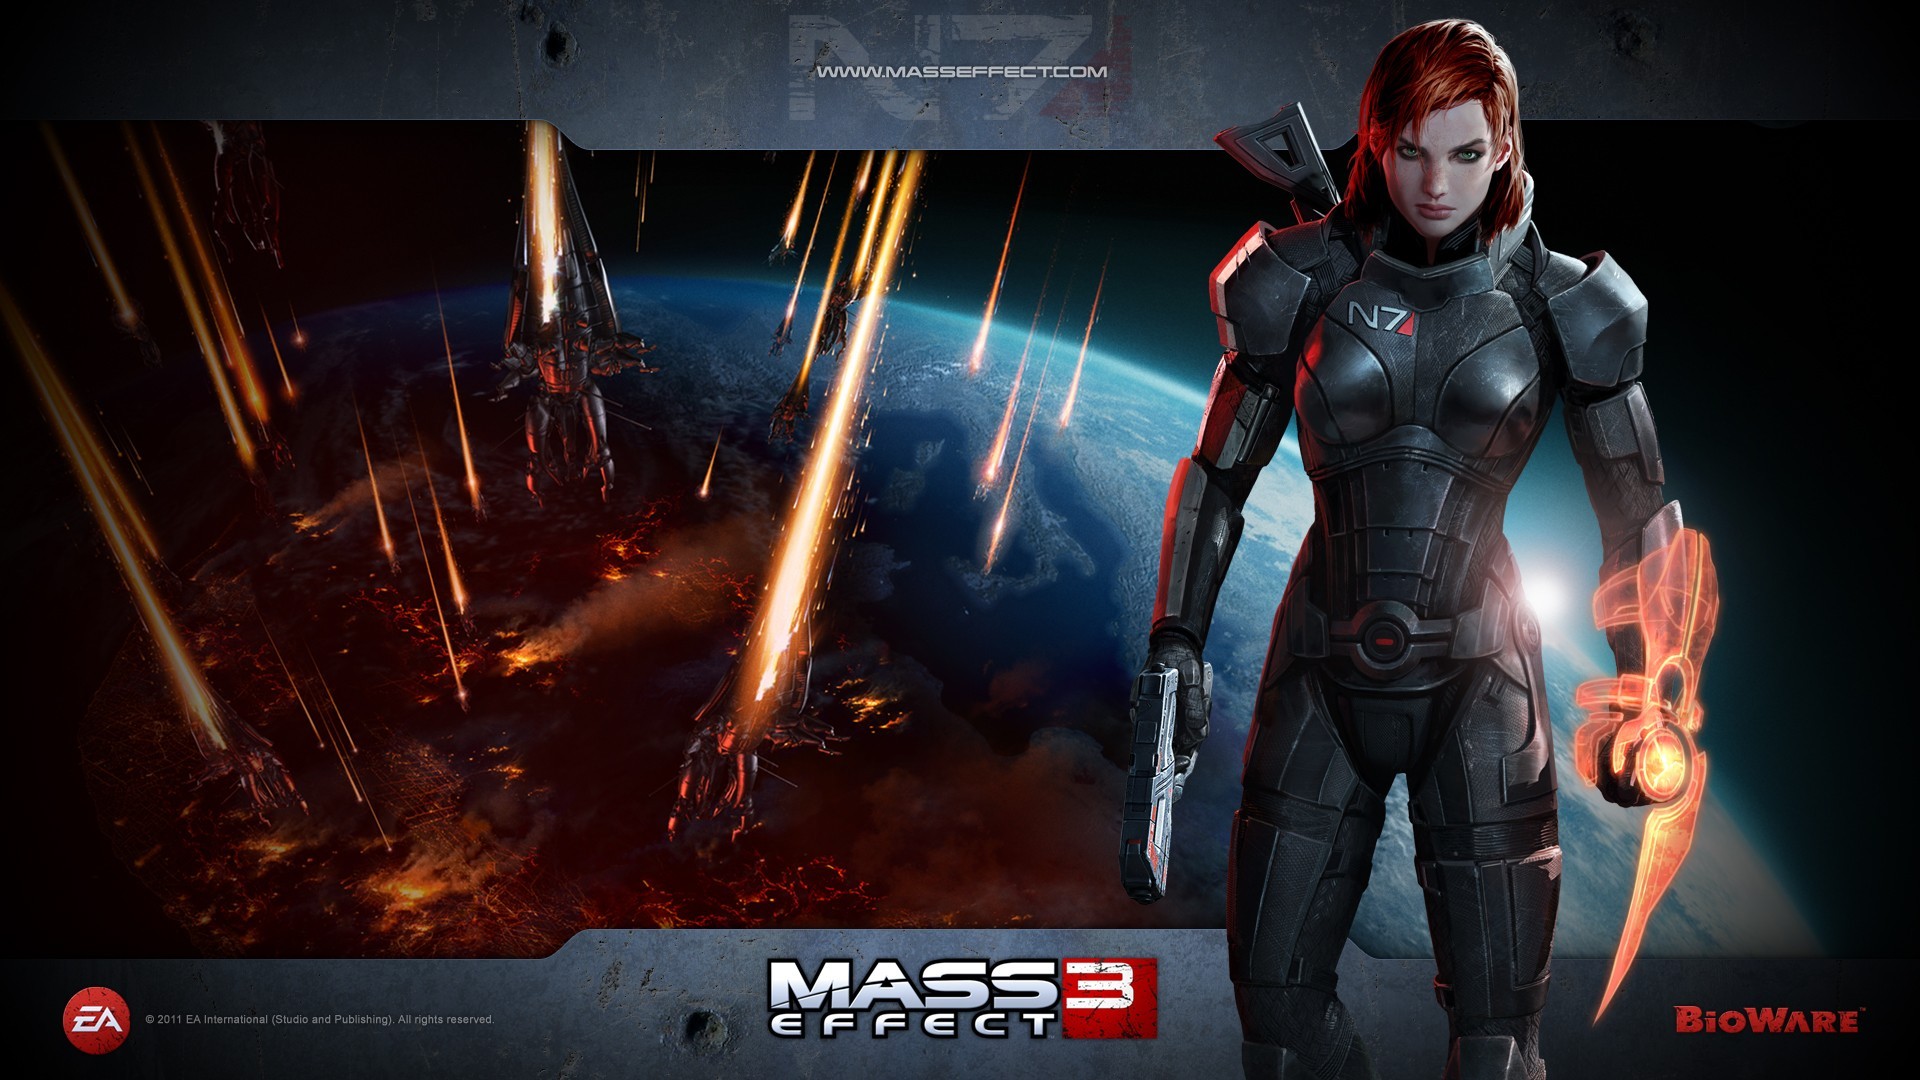 General 1920x1080 video games Mass Effect 3 Mass Effect PC gaming standing Commander Shepard EA Games 2011 (Year) video game girls redhead girls with guns women weapon